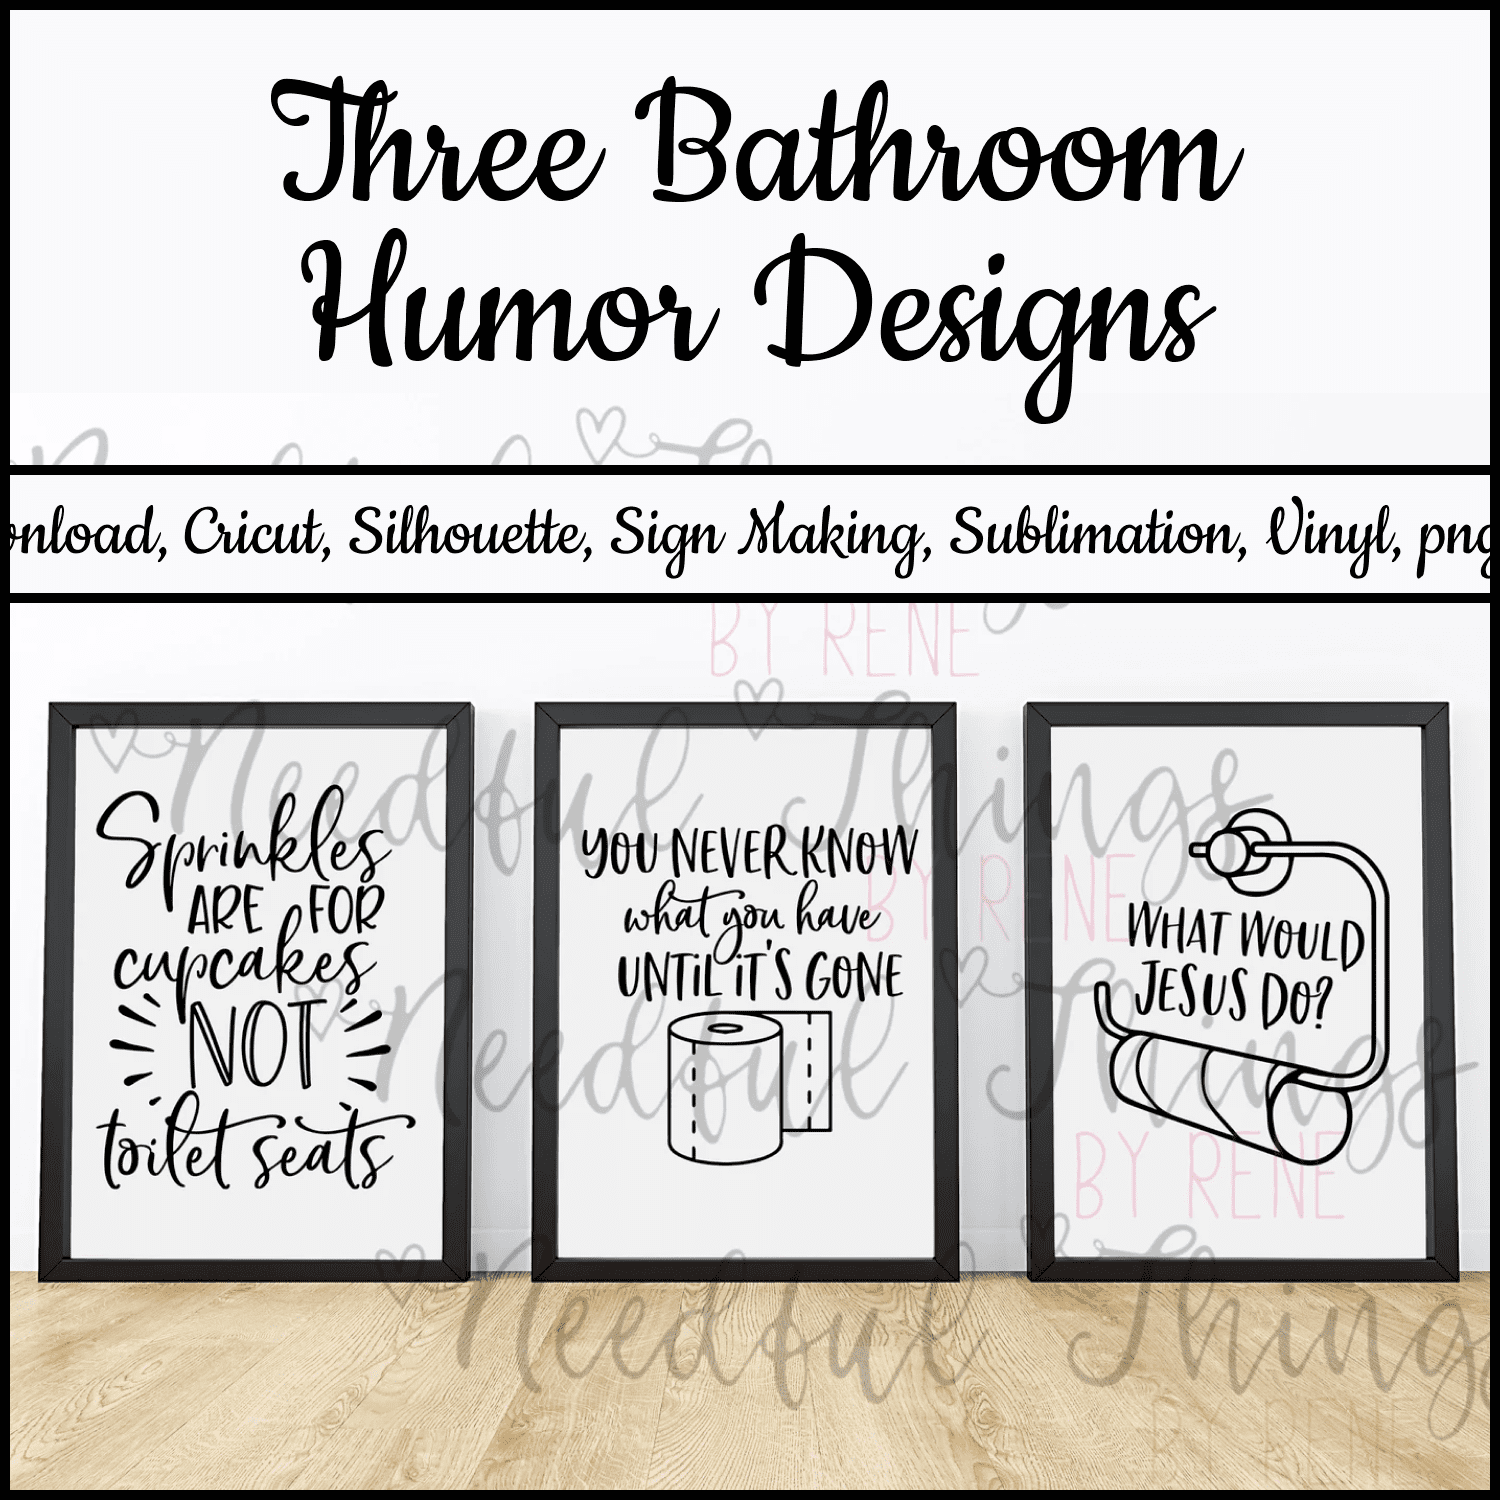 Three Bathroom Humor Designs.